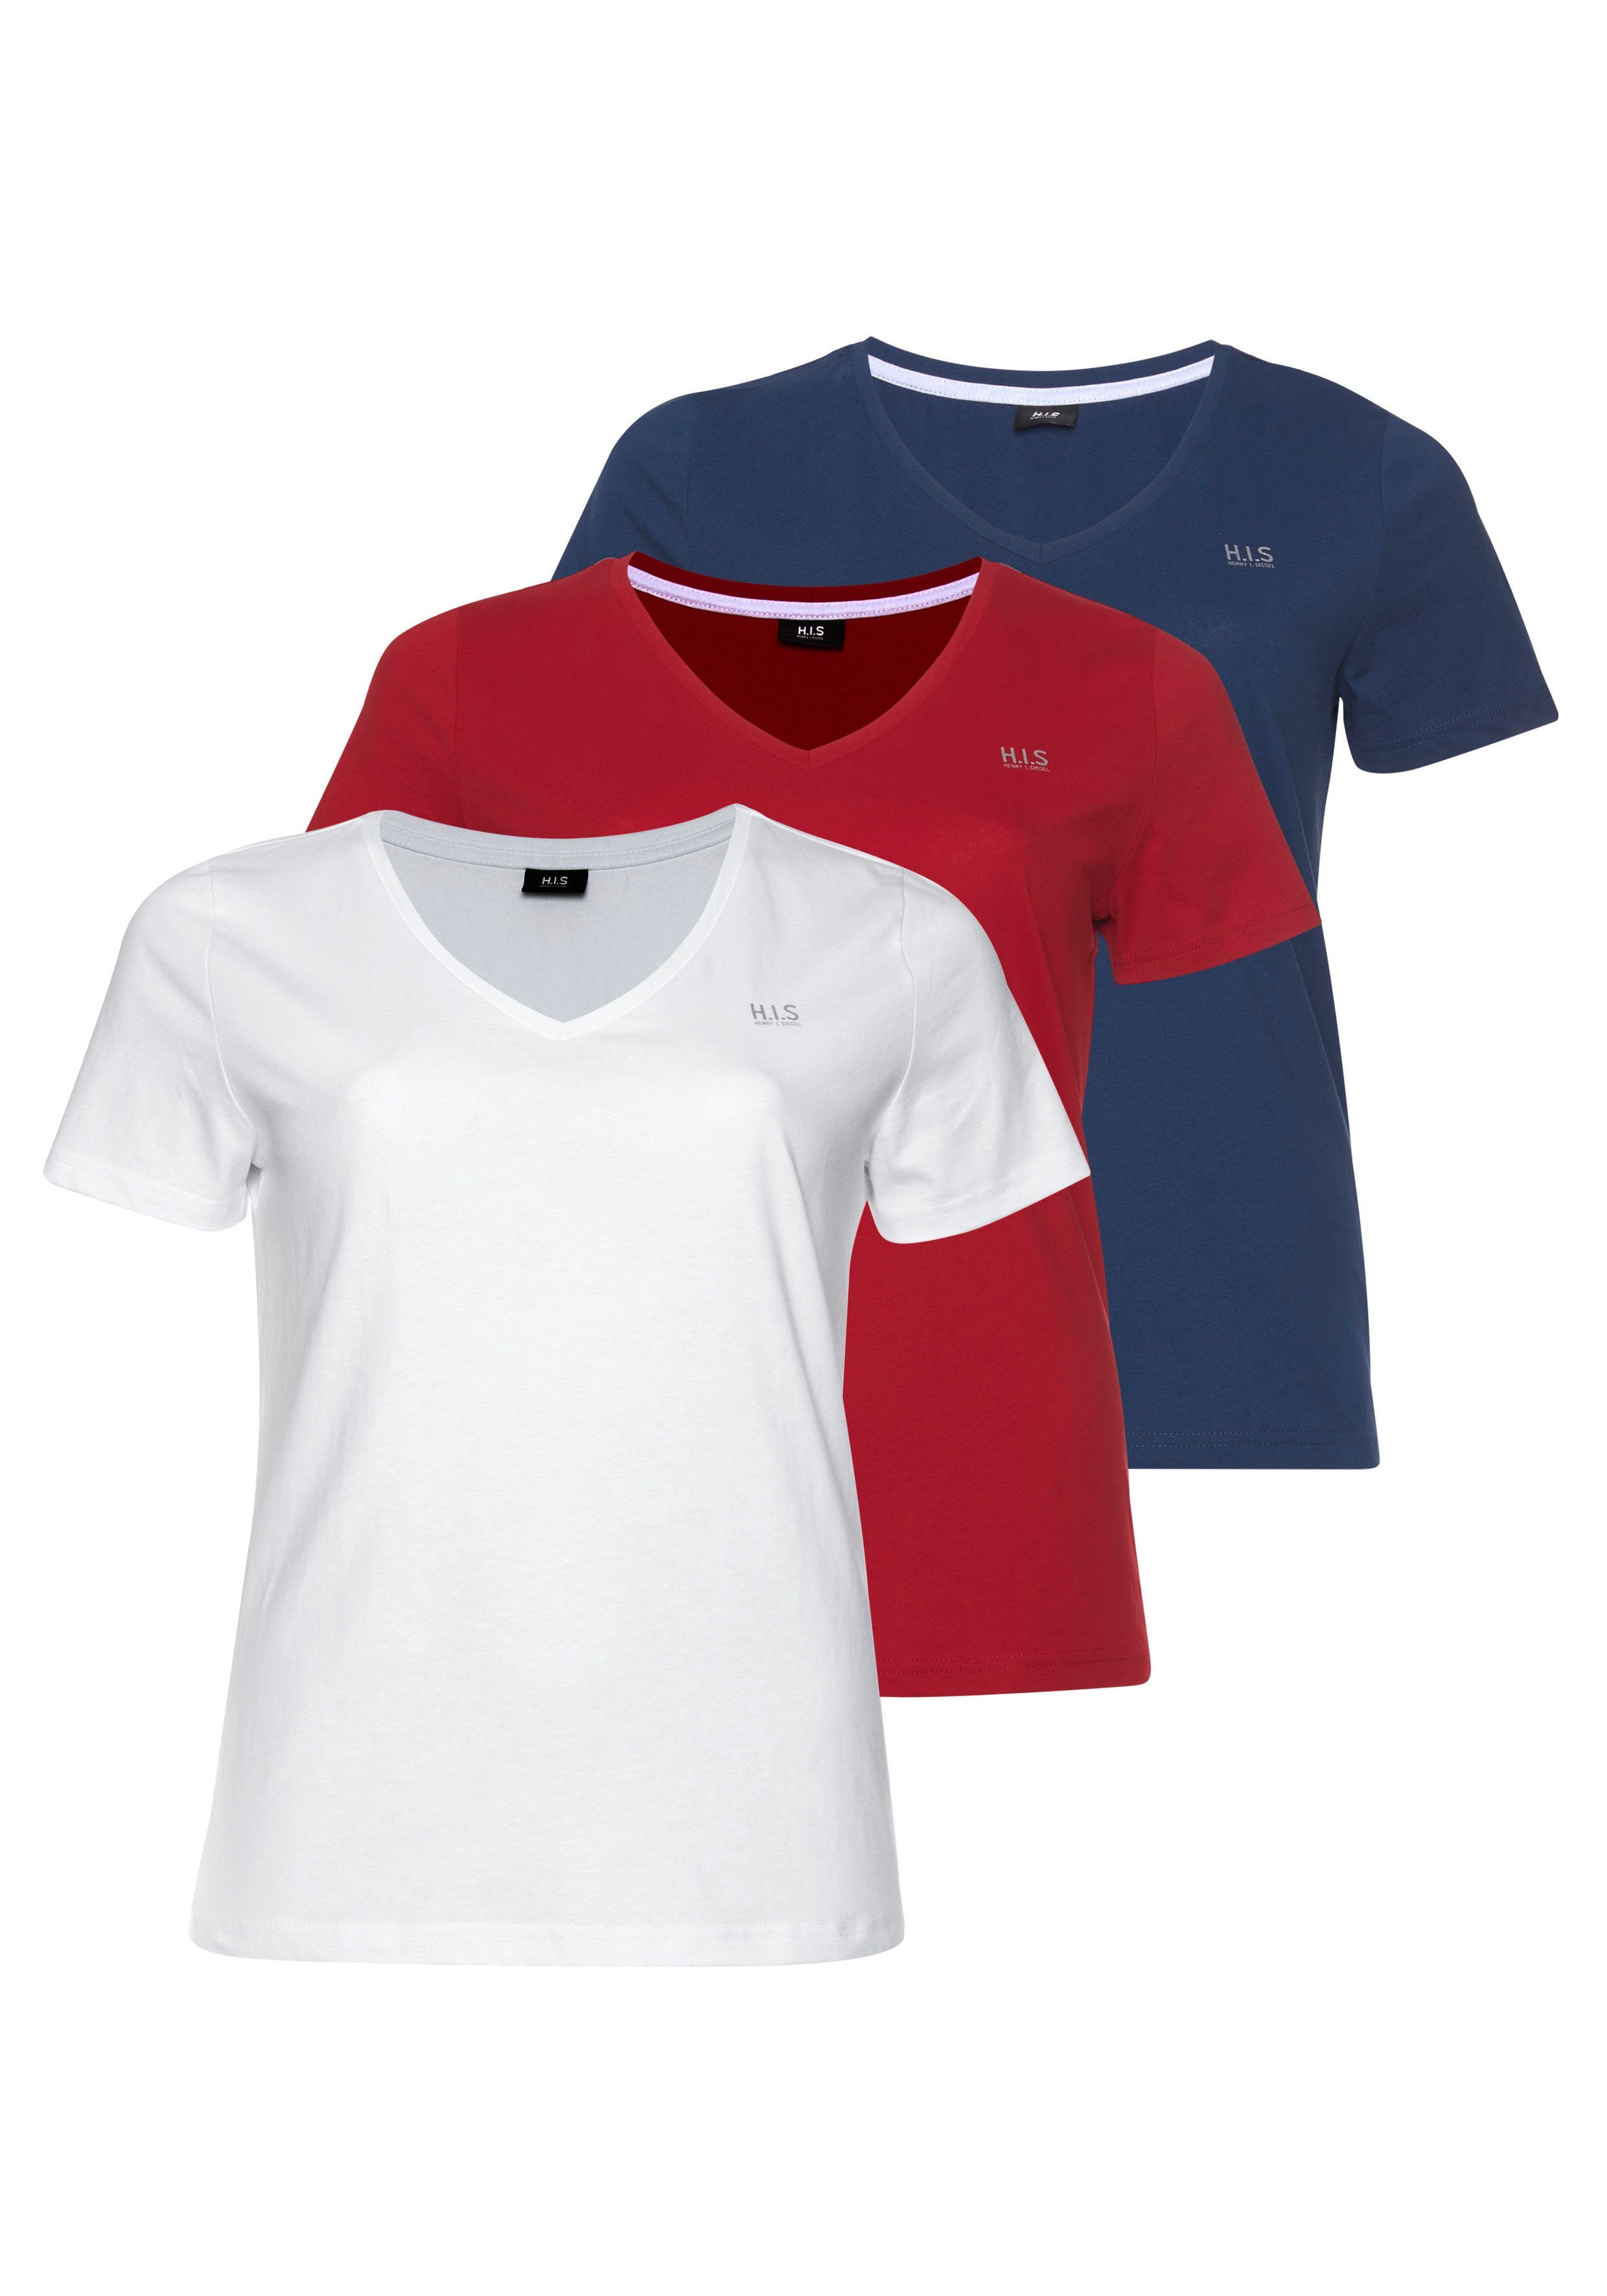 H.I.S T-Shirt Essential-Basics (Spar-Set, 3er-Pack) Große Größen marine, weiß, rot | Sport-T-Shirts